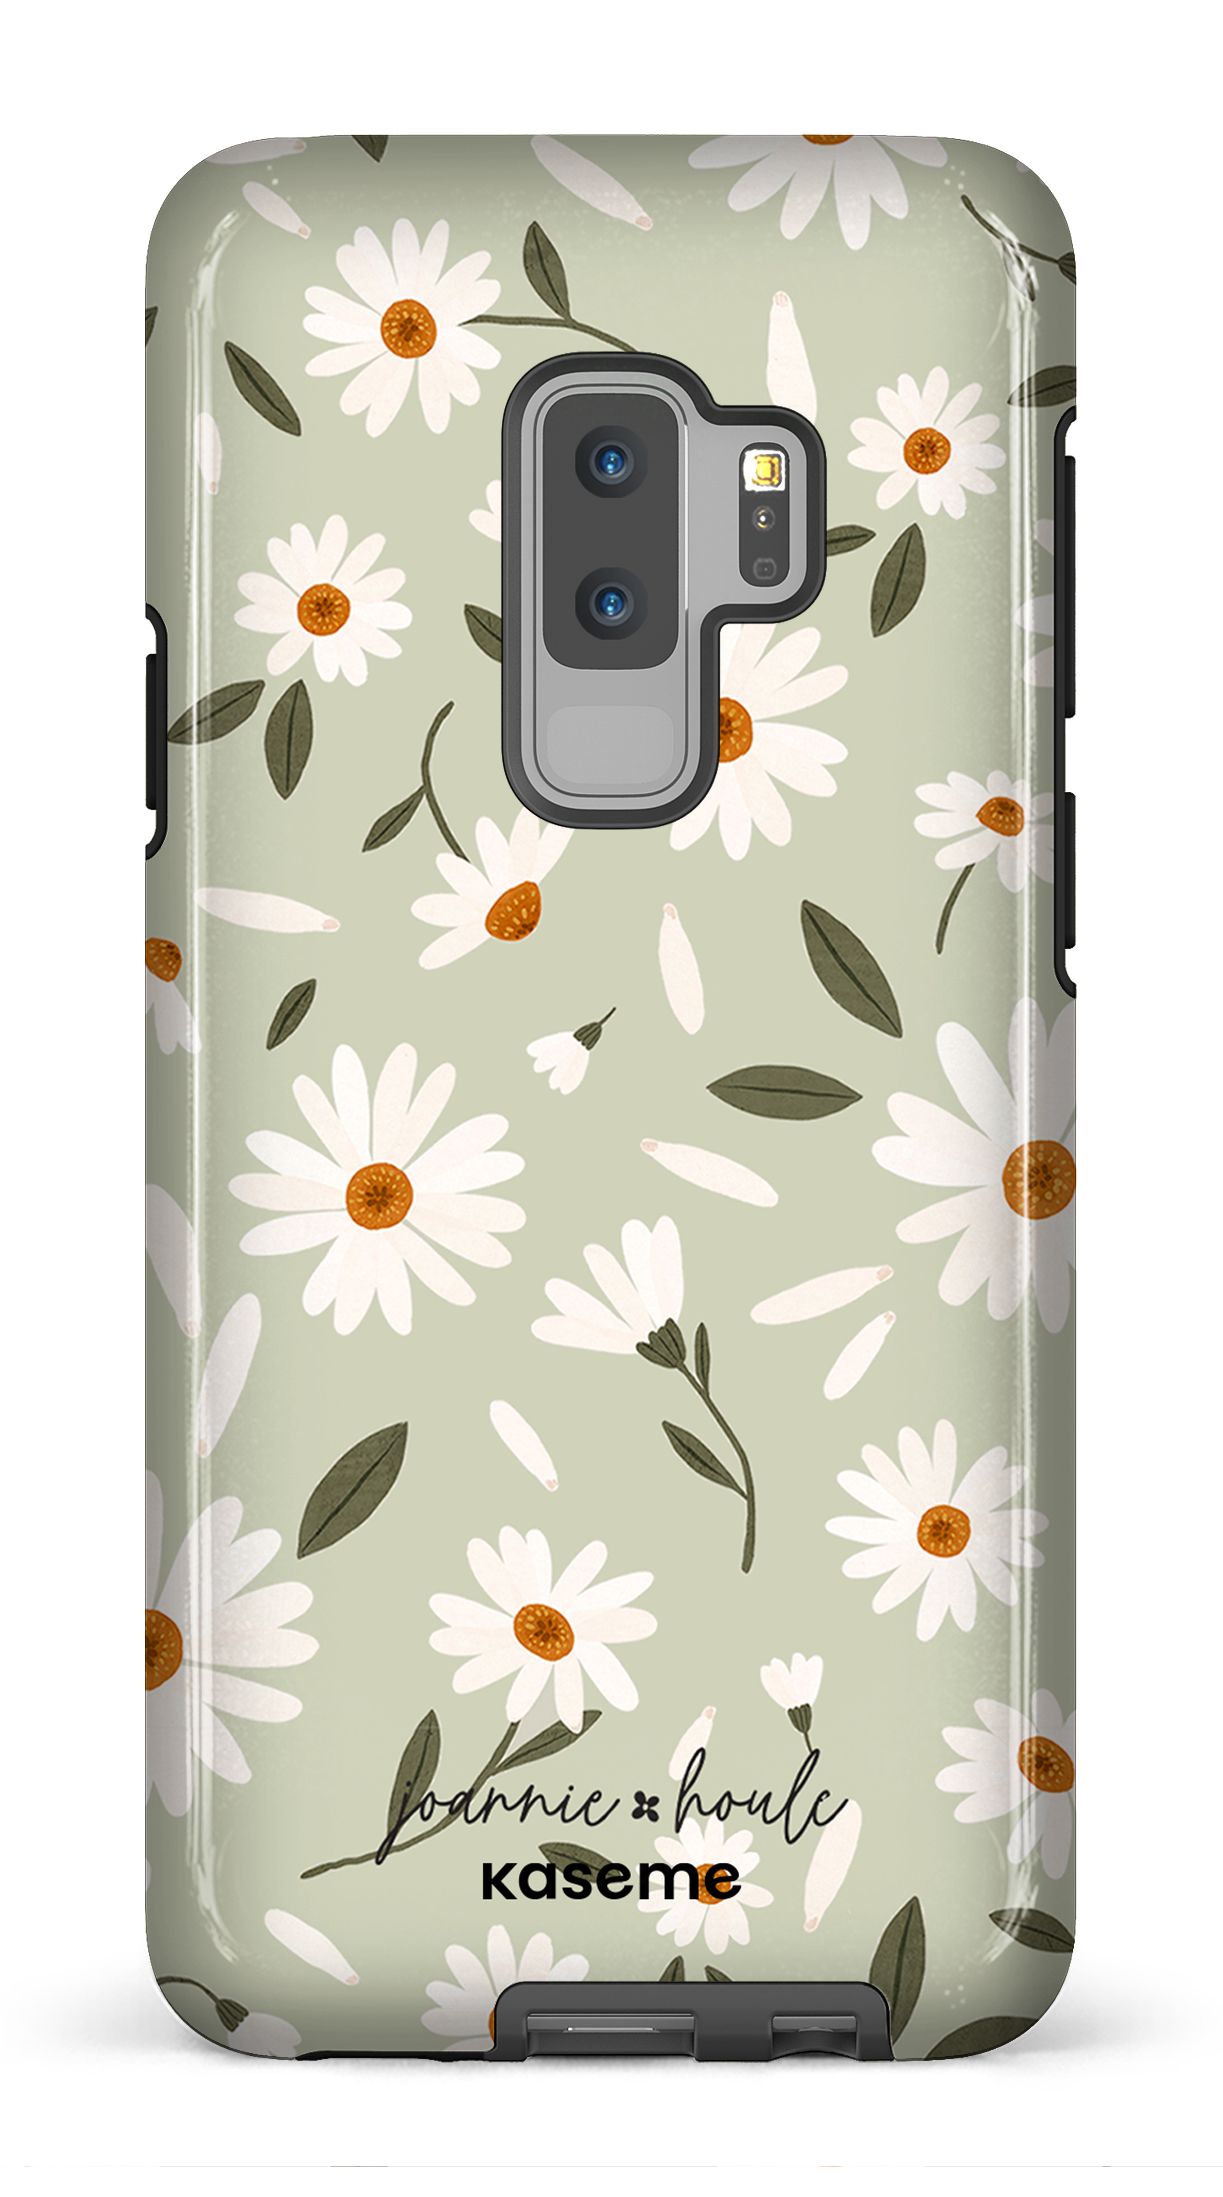 Daisy Bouquet Sage by Joannie Houle - Galaxy S9 Plus